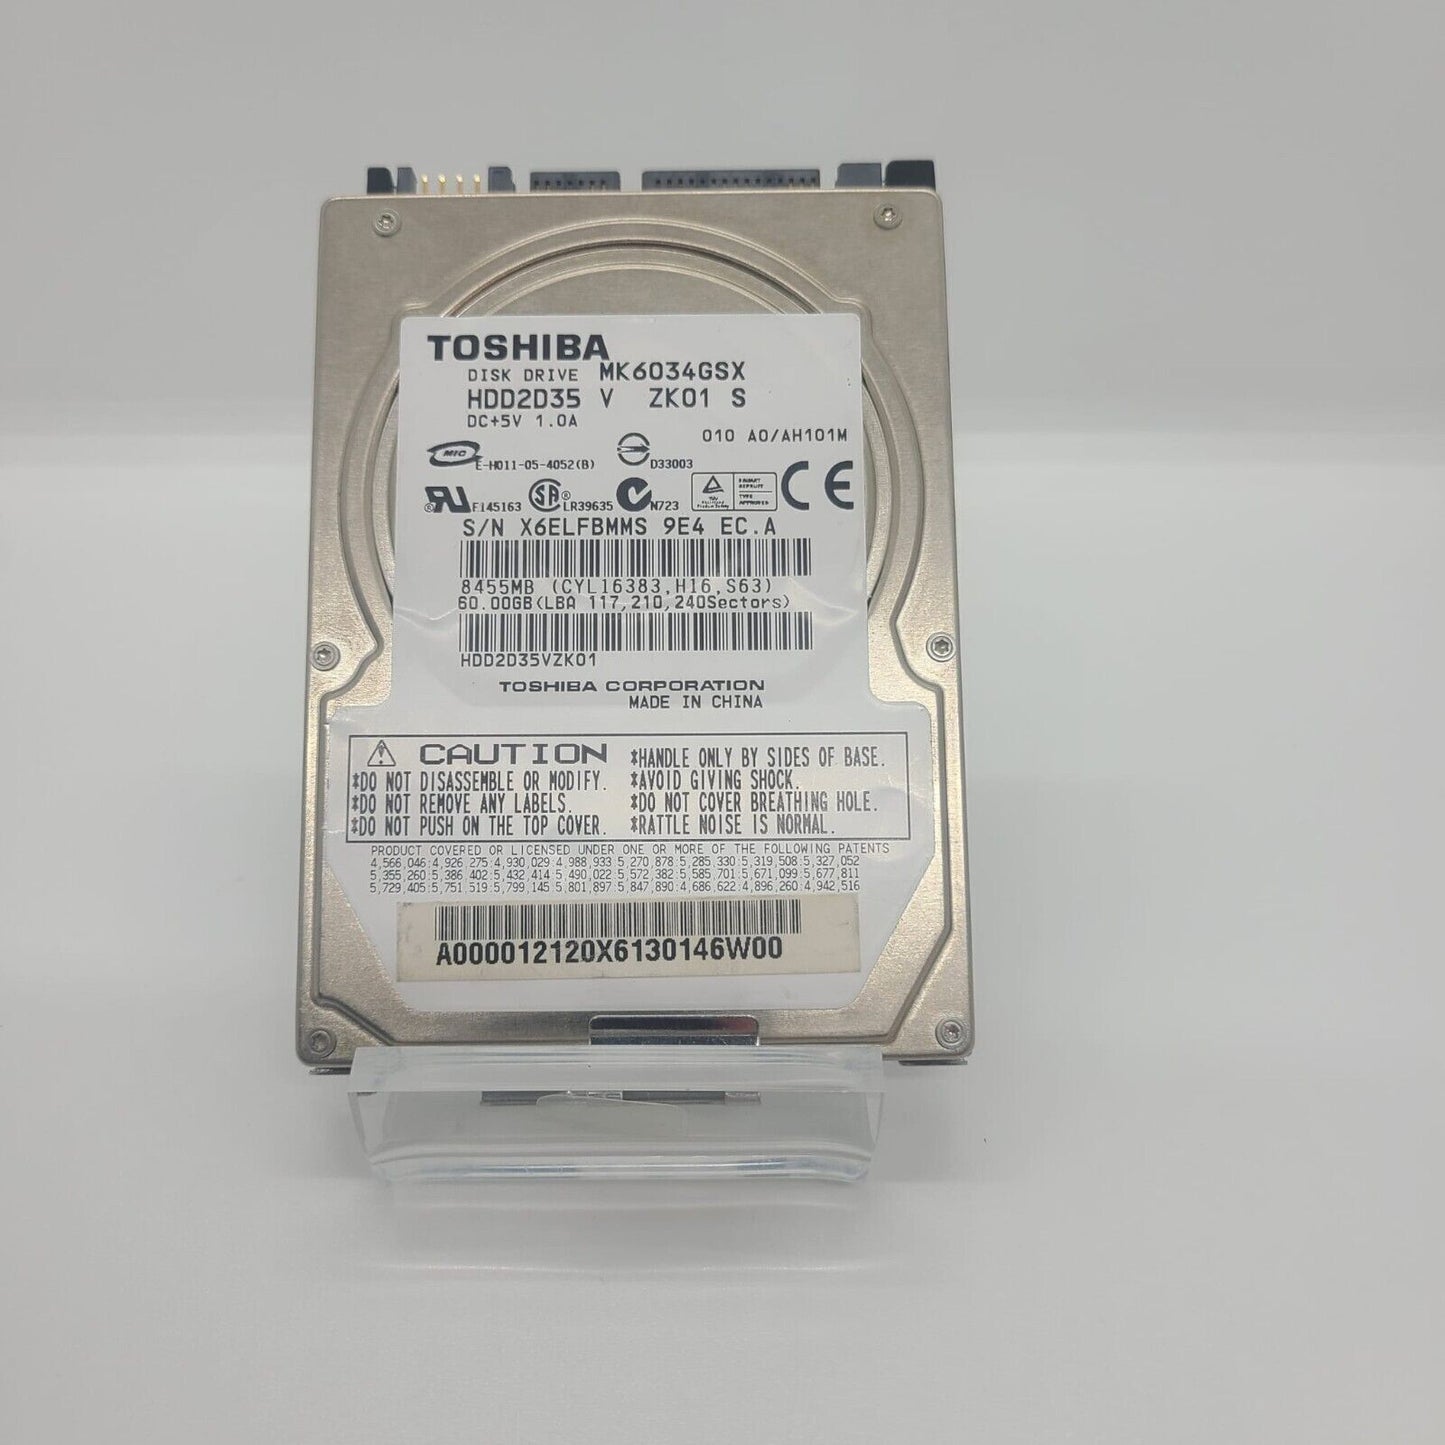 Toshiba Disk Drive MK6034GSX HDD2D35 60GB Laptop Hard Disk Drive